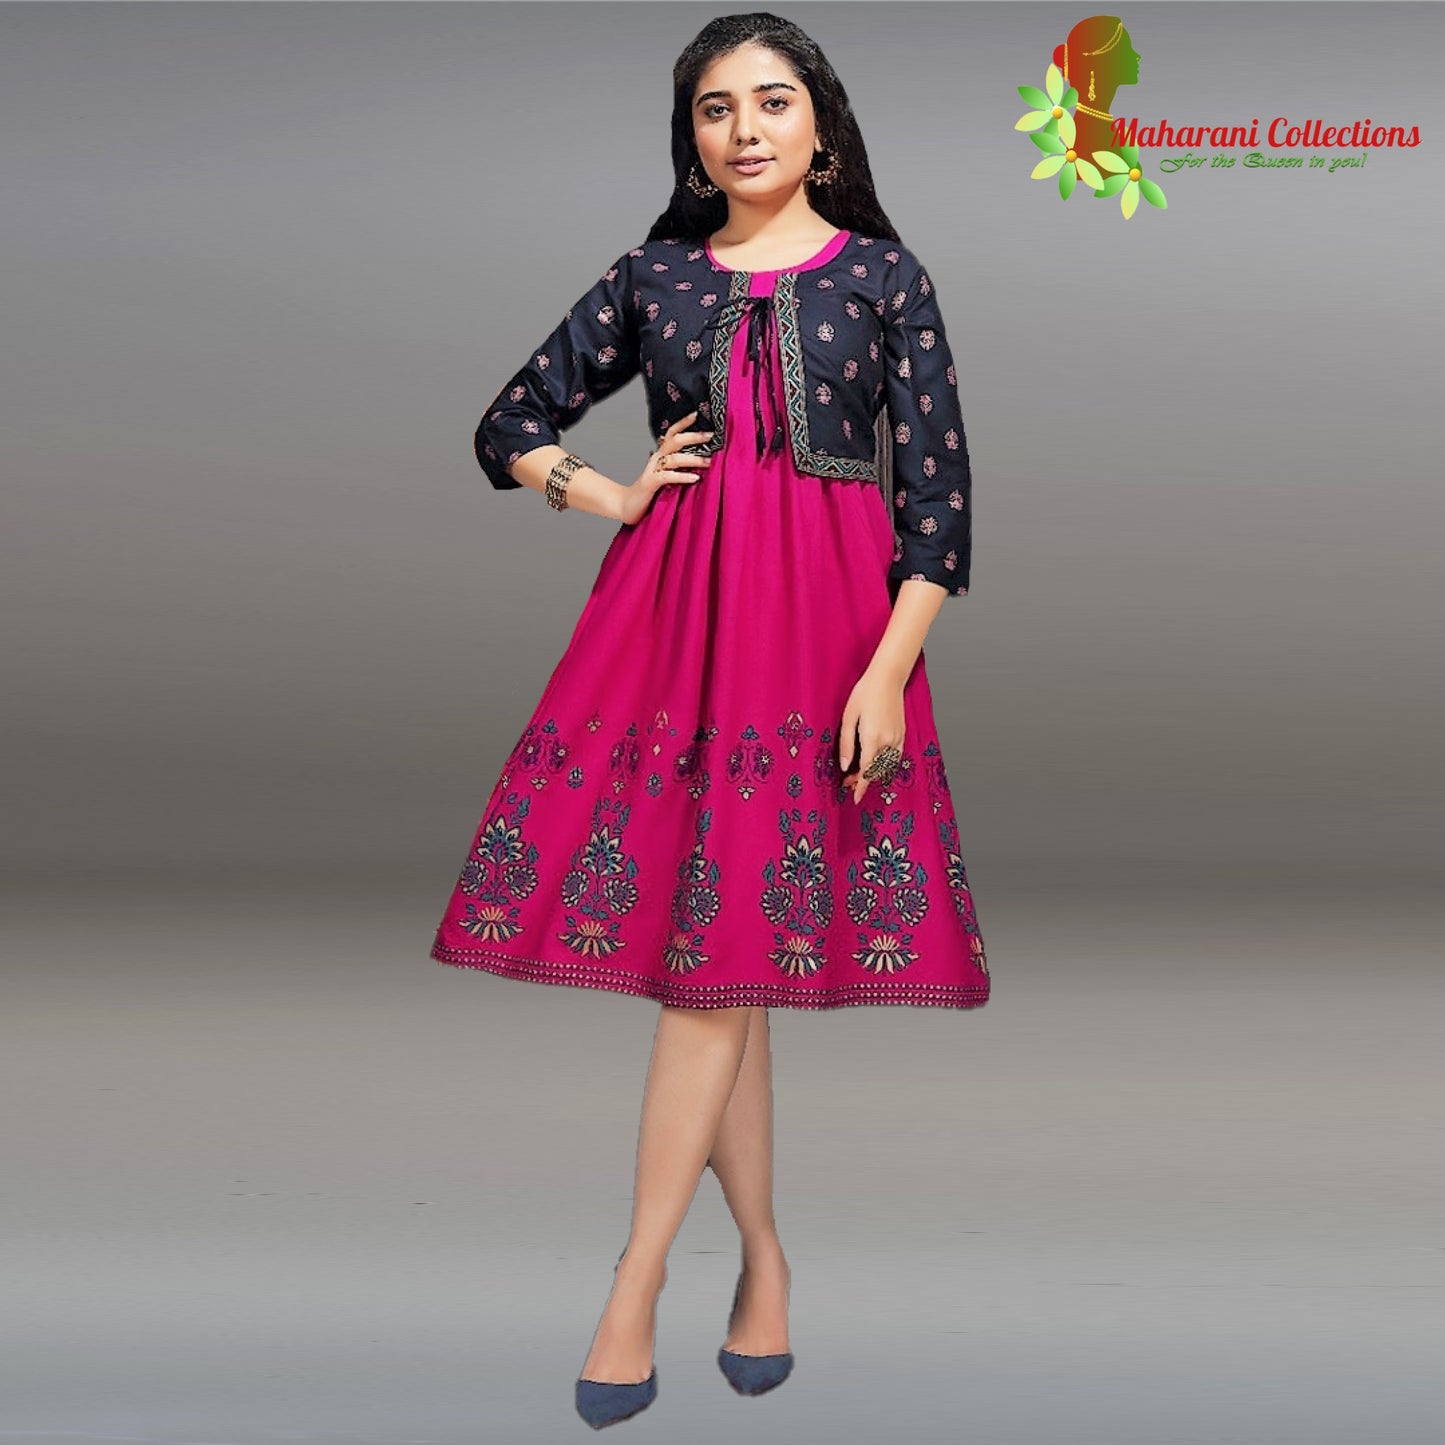 Maharani's Designer Short Dress - Pink (M) - Rayon and Cotton